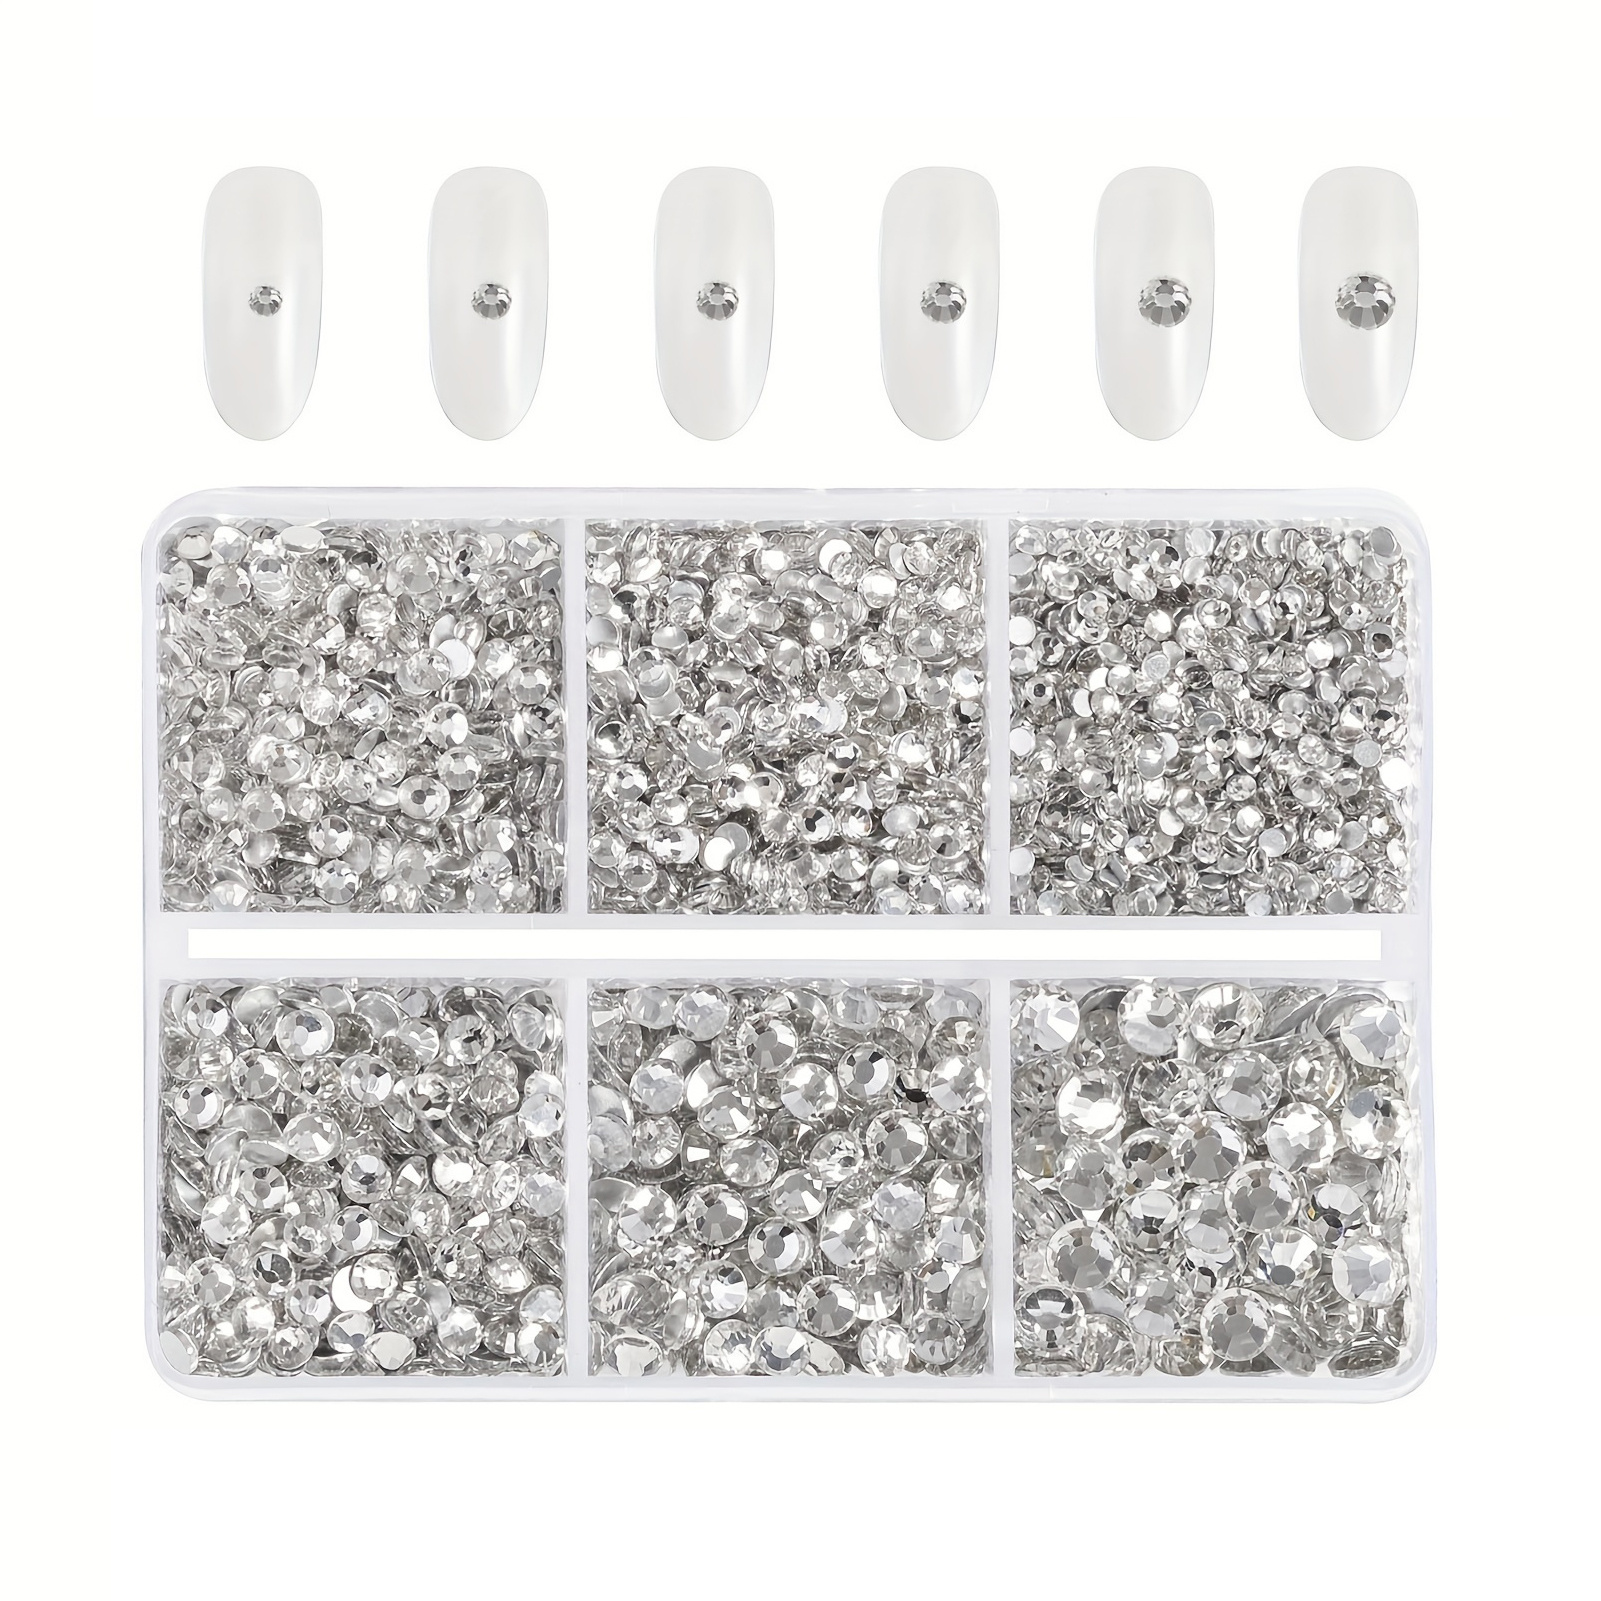 Mixed Sizes 6 Grid Box Crystal AB Glass HotFix Rhinestones For Clothing DIY